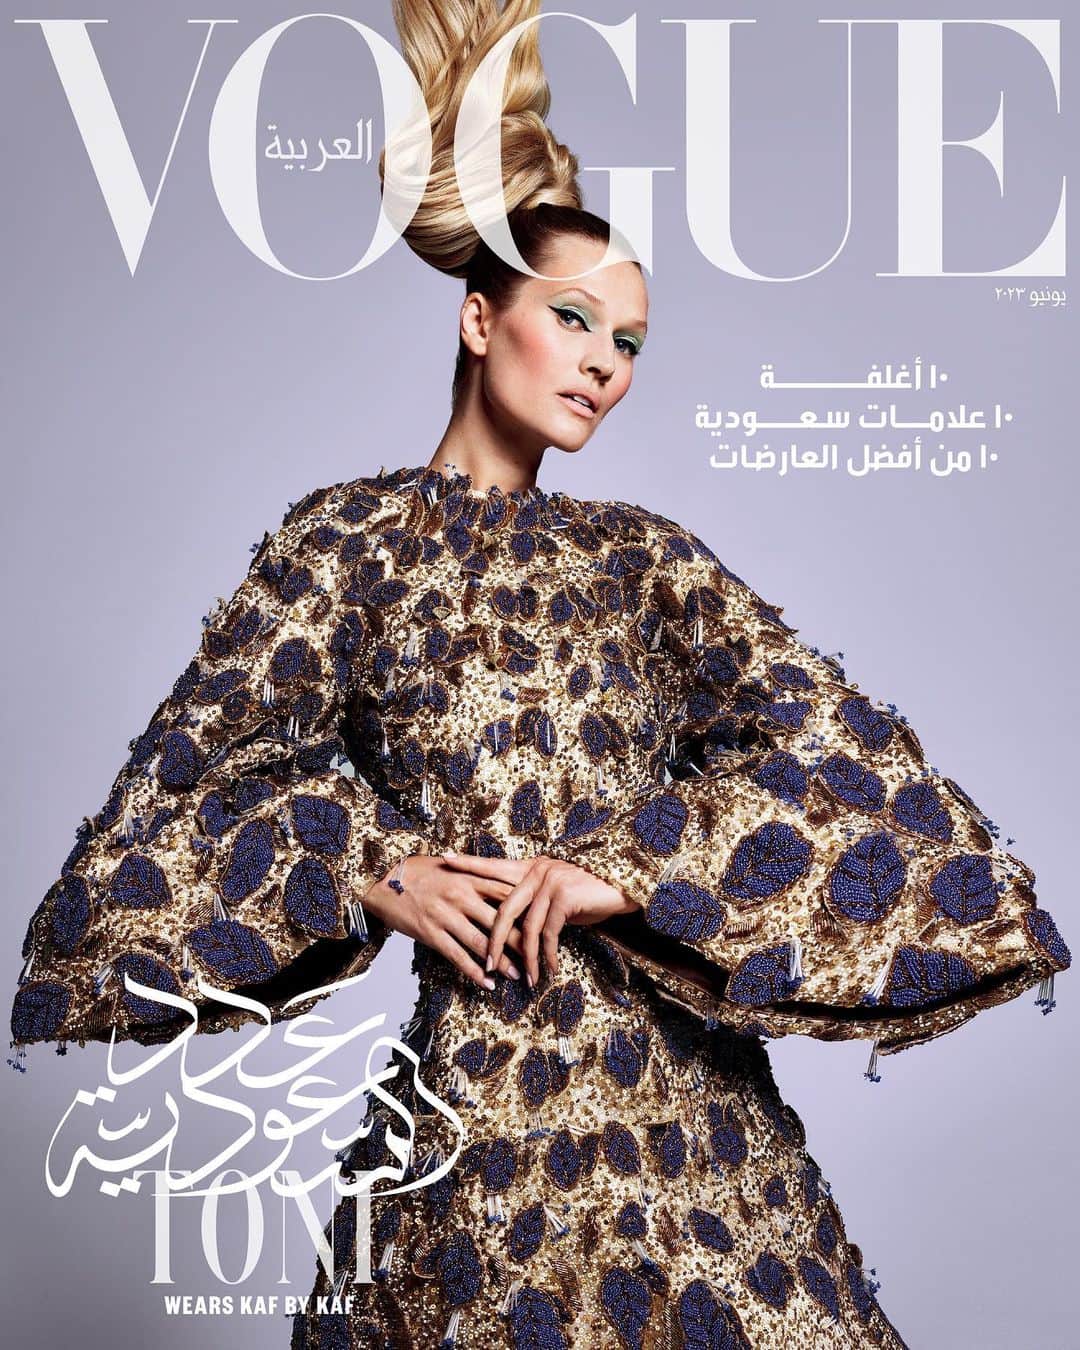 トニ・ガーンのインスタグラム：「German model #ToniGarrn is no stranger to the magic of Arab fashion, and this month, she sparkles in shades of gold and lavender in luxury fashion label #KafByKaf.  With this statement-making number, designer #KawtharAlhoraish is proudly honoring Saudi's legacy. “We are celebrating the color lavender. Now purple is the new green as it symbolizes the identity of the Kingdom.” Cover 8 of 10. Tap the link in bio for more.   10 iconic covers. 10 incredible top models. 10 masterful Saudi designers. #SaudiIssue   ليست العارضةُ الألمانية #توني_غارن بغريبة على الموضة العربية وجاذبيتها. وهذا الشهر، تتوهج بفستان يزهو بالذهبي والبنفسجي من علامة الأزياء الفاخرة #كاف_باي_كاف. ومن خلال هذا الفستان اللافت، تبدي #كوثر_الهريش تقديرها للتراث السعودي بكل فخر واعتزاز. تقول: "نحن نحتفي باللون البنفسجي. فقد أصبح اللون الأرجواني الآن بمثابة اللون الأخضر الجديد، فهو يرمز لهوية المملكة". الغلاف 8 من 10. تفضلوا بالضغط على الرابط في البايو للاطلاع على المزيد.   10 أغلفة أيقونية. 10 من أفضل العارضات المذهلات. 10 مصممين سعوديين بارعين. #عدد_السعودية   Editor-in-chief: @mrarnaut Photography: @domenvandevelde Style: @nicolaformichetti Fashion director: @aminejreissaty Fashion market editor: @mohammadhazemrezq Makeup: @liselottevansaarloos Hair: @joerirouffa Production: @allisonsam @photobombproduction Agency: @thelionsmgmt Calligraphy: @heyghulman Words: @jasminebager」